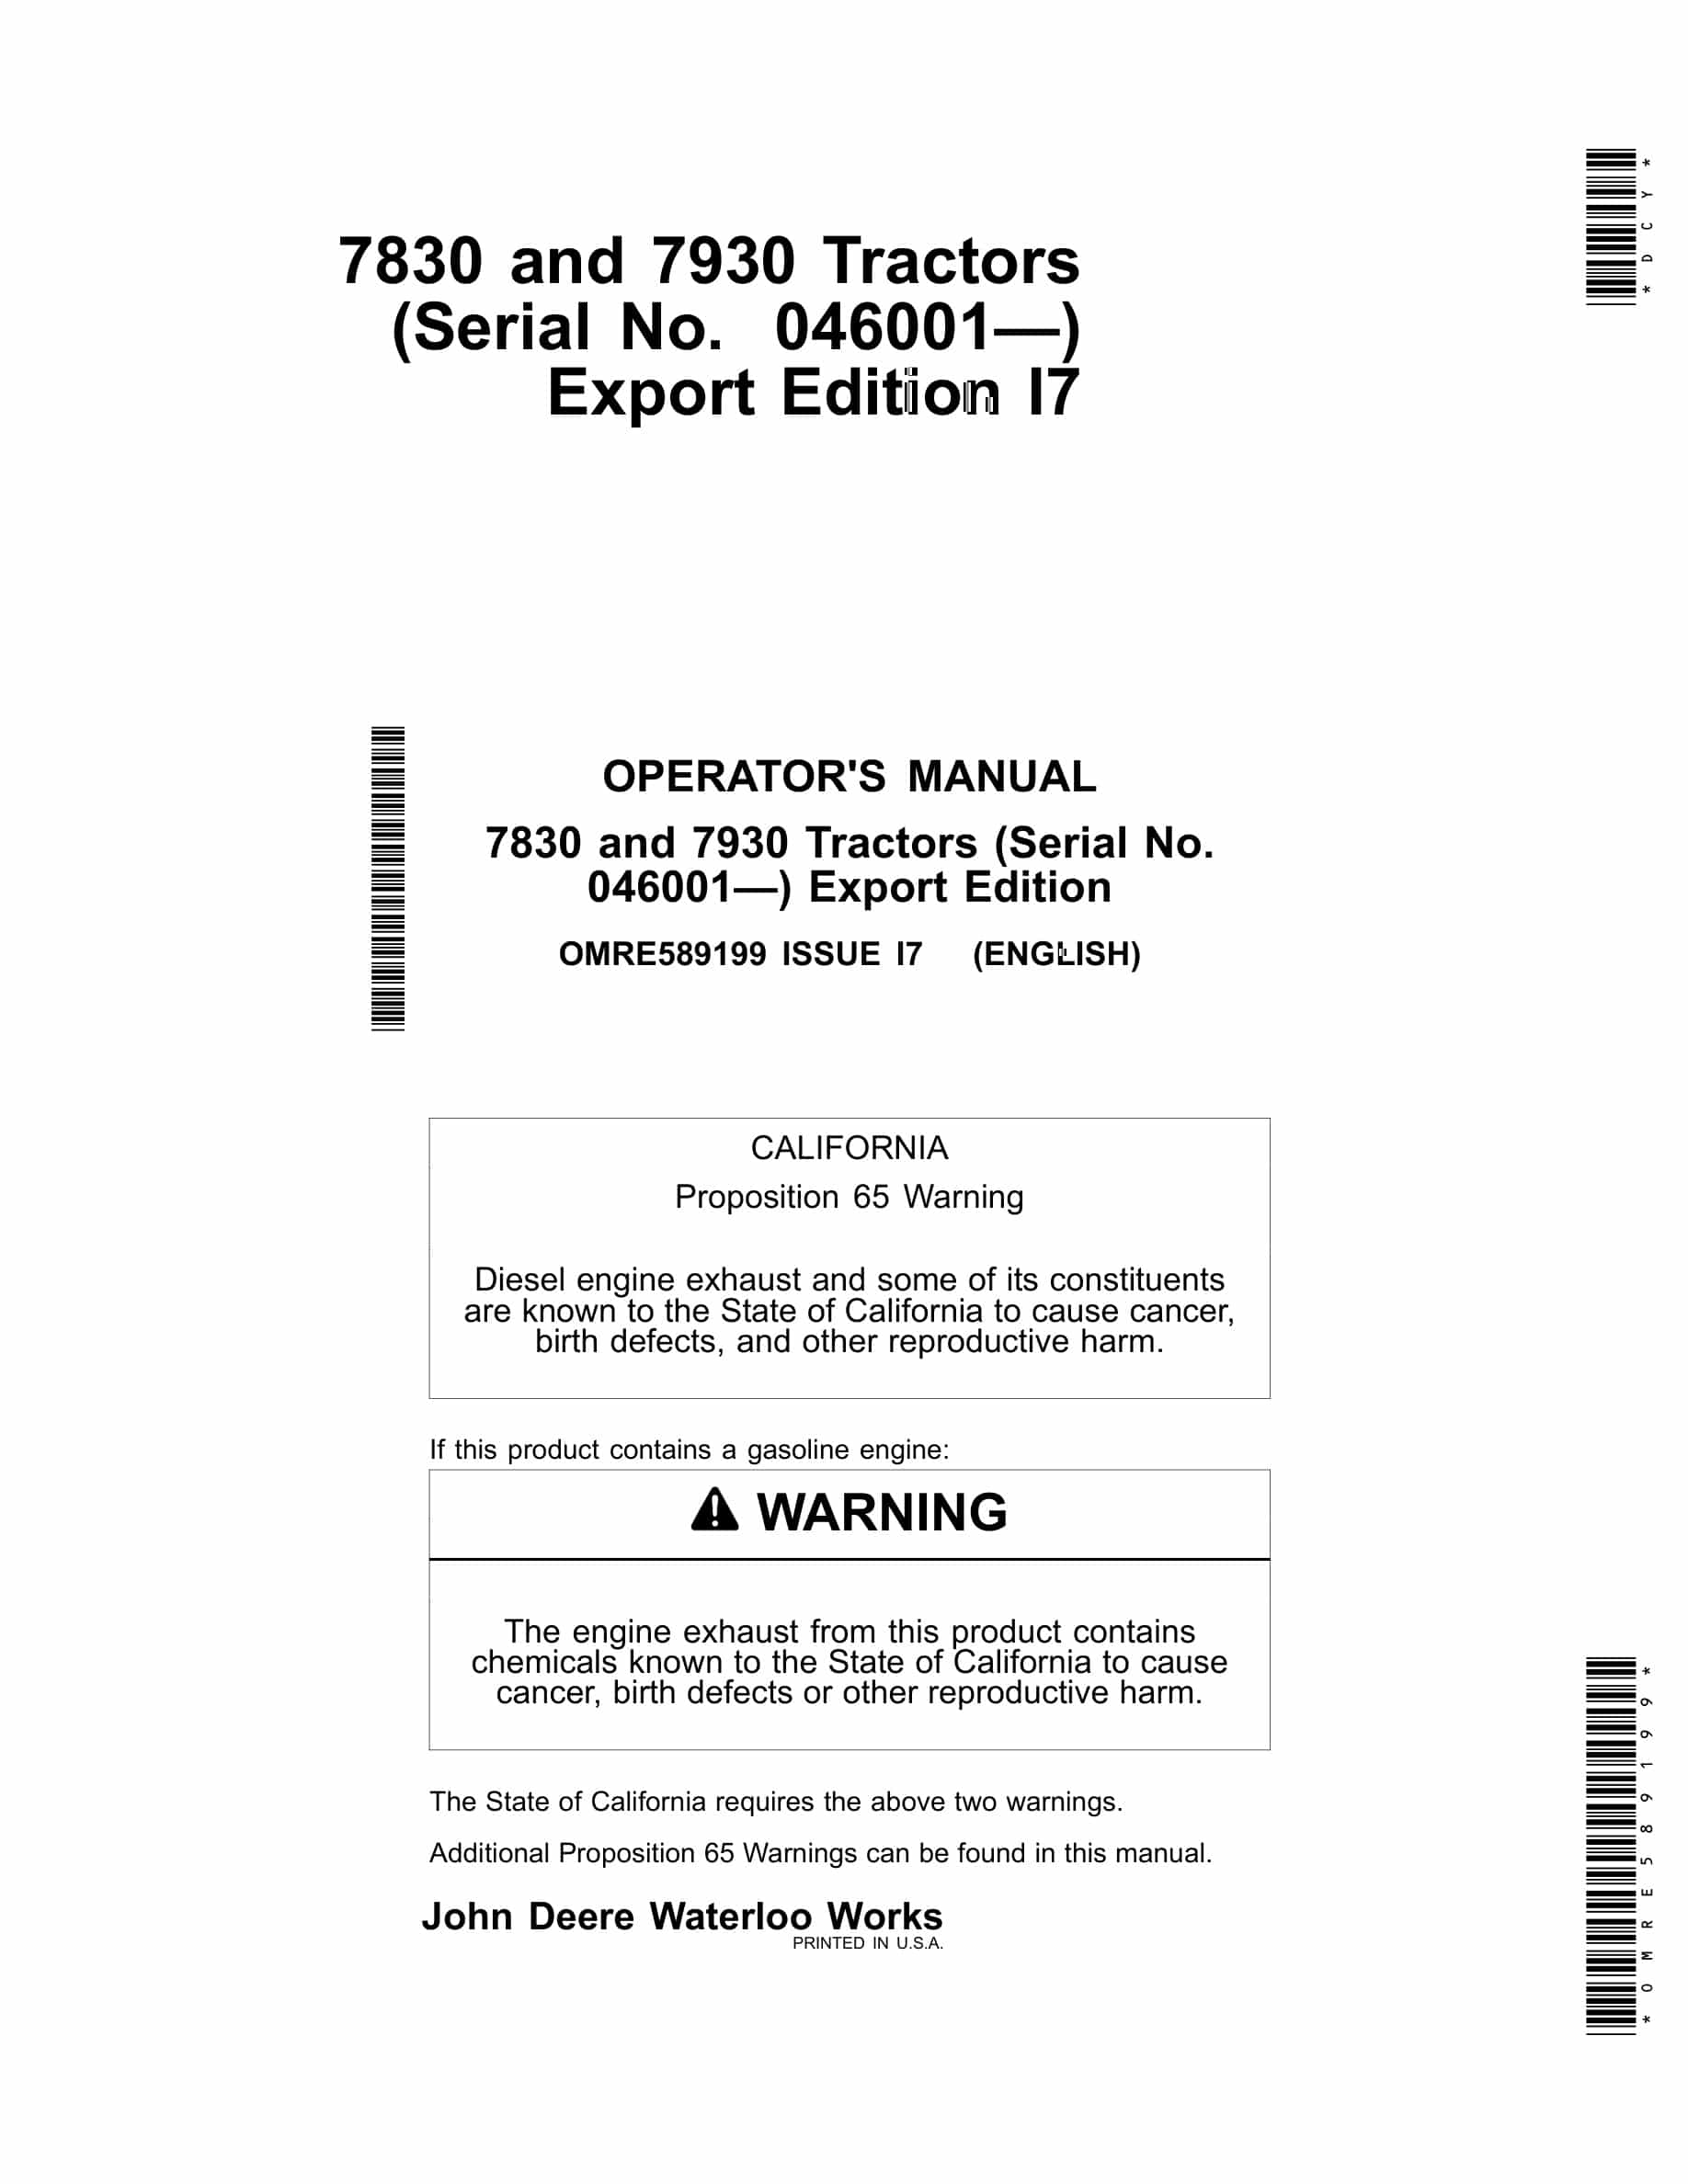 John Deere 7830 And 7930 Tractors Operator Manuals OMRE589199-1